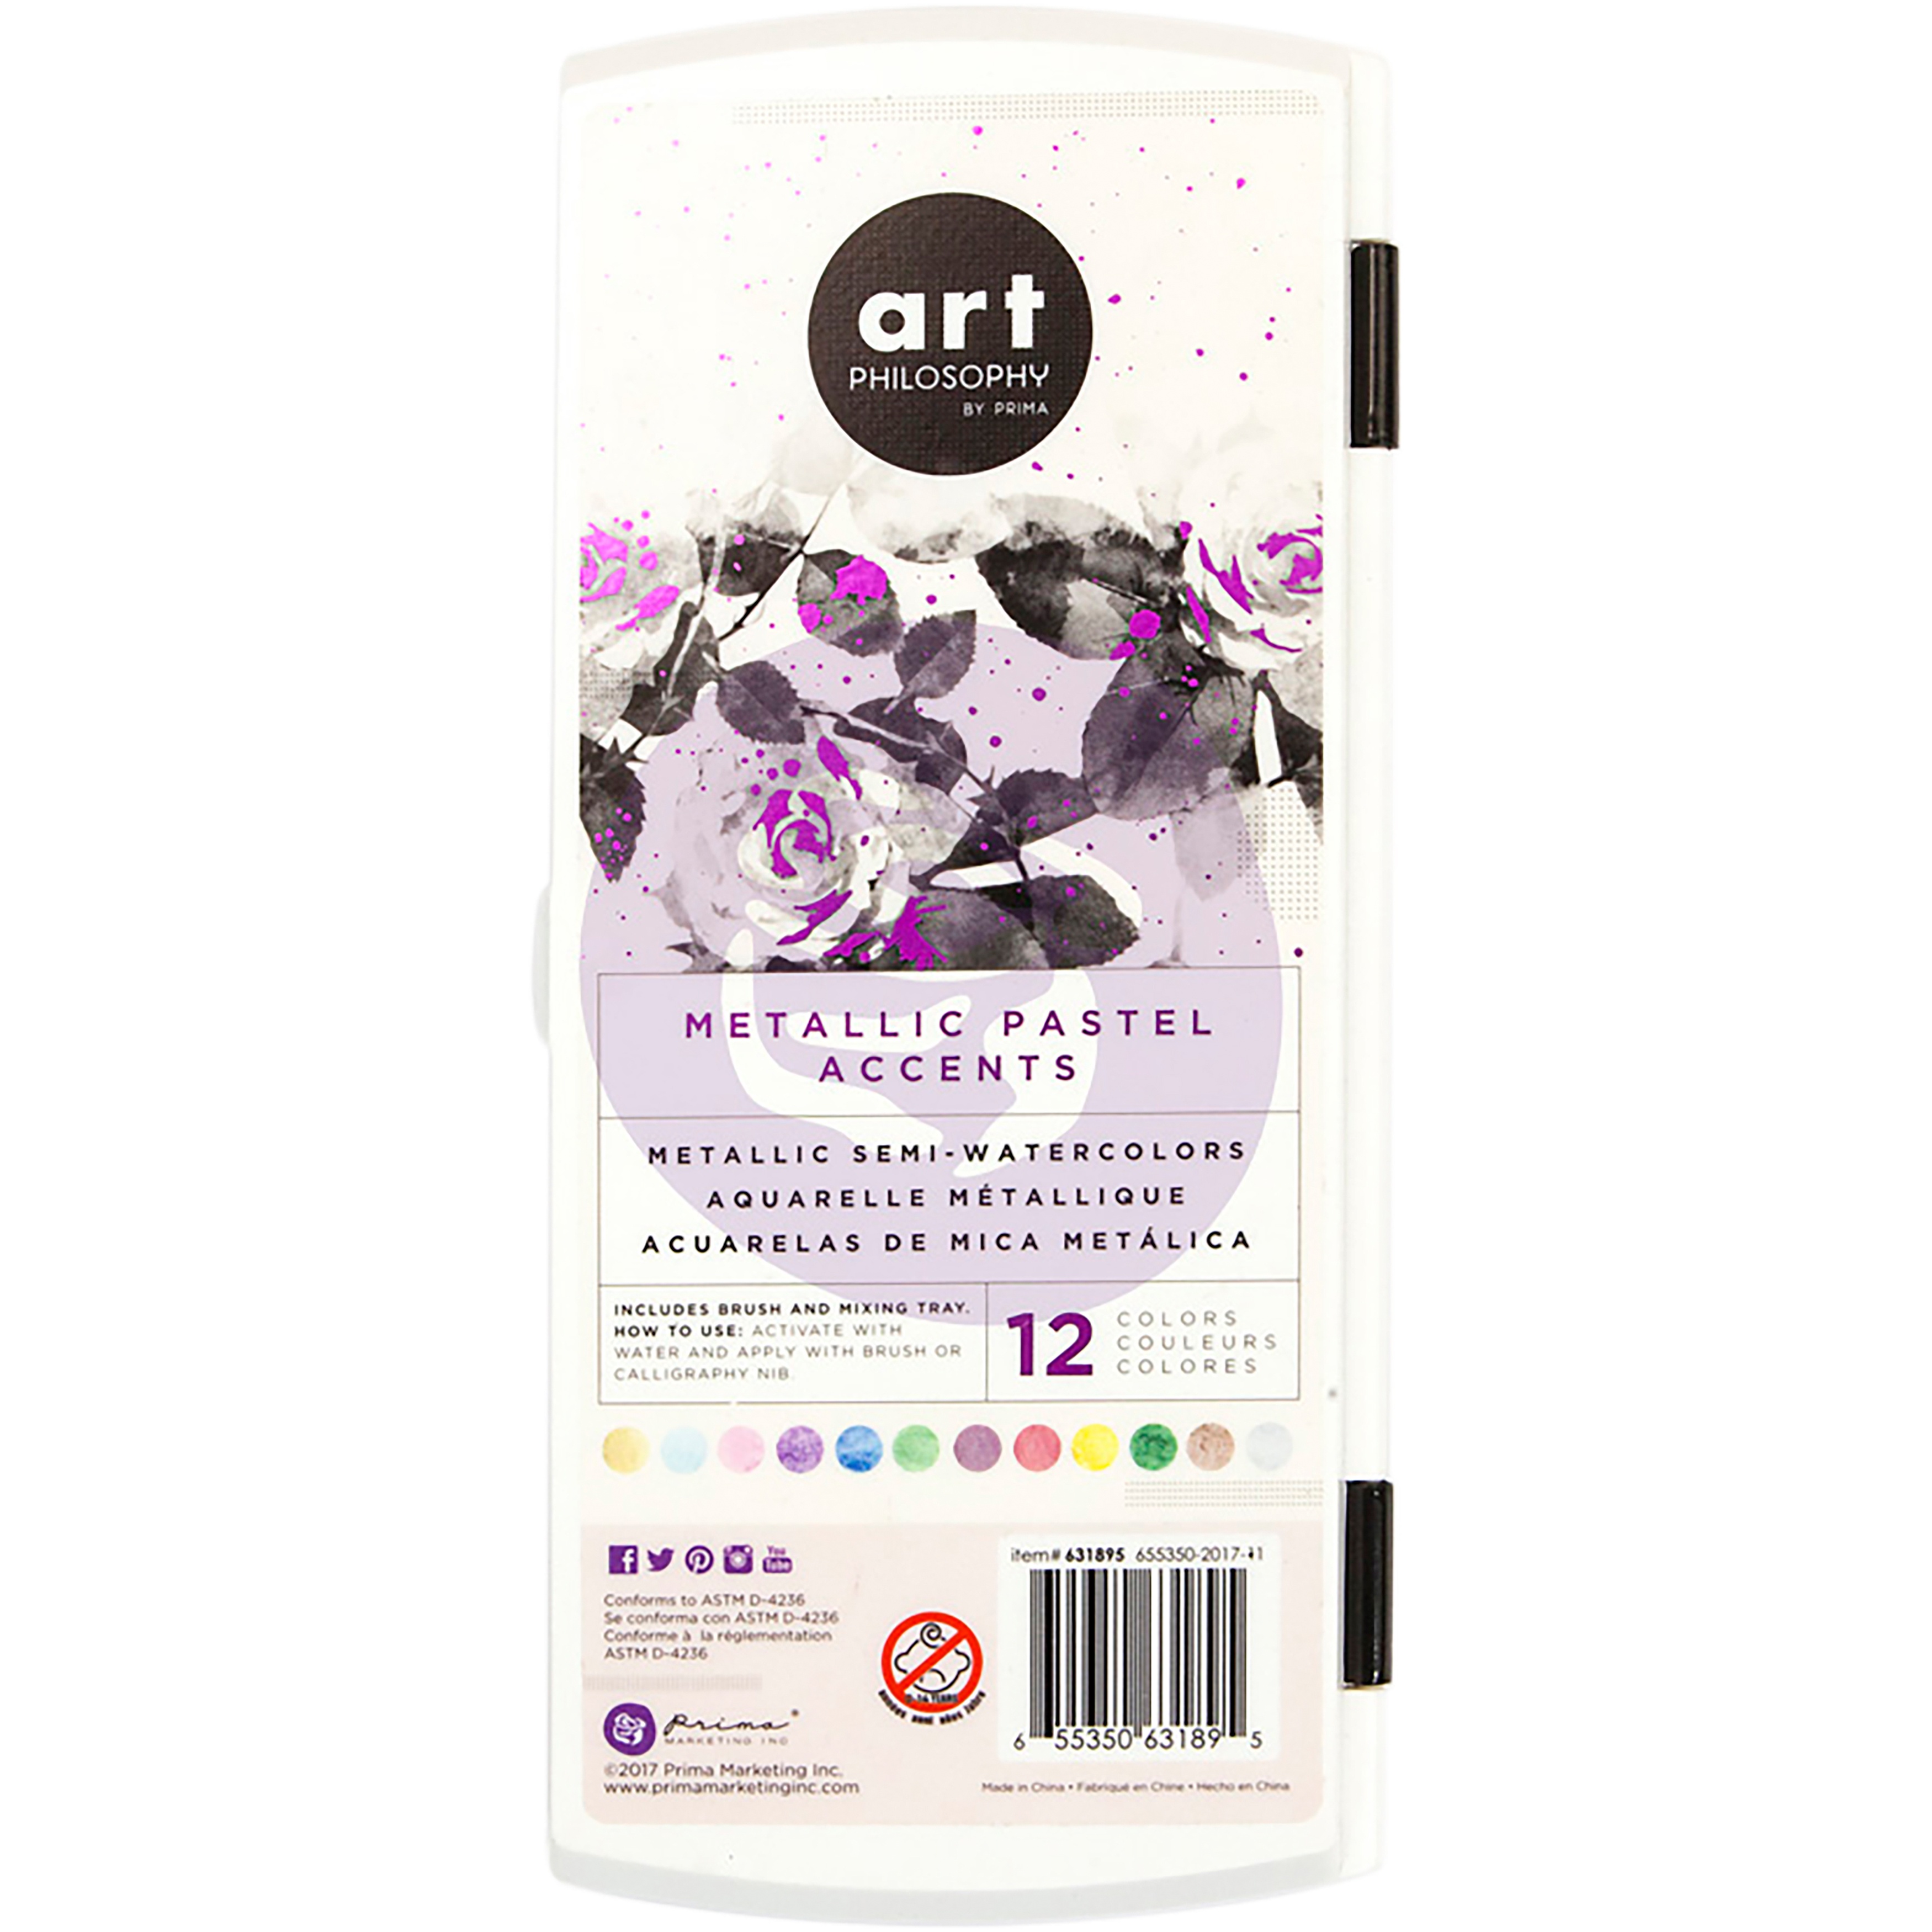 Prima® Art Philosophy® Metallic Pastel Accents Semi-Watercolor Paint Set,  12ct.